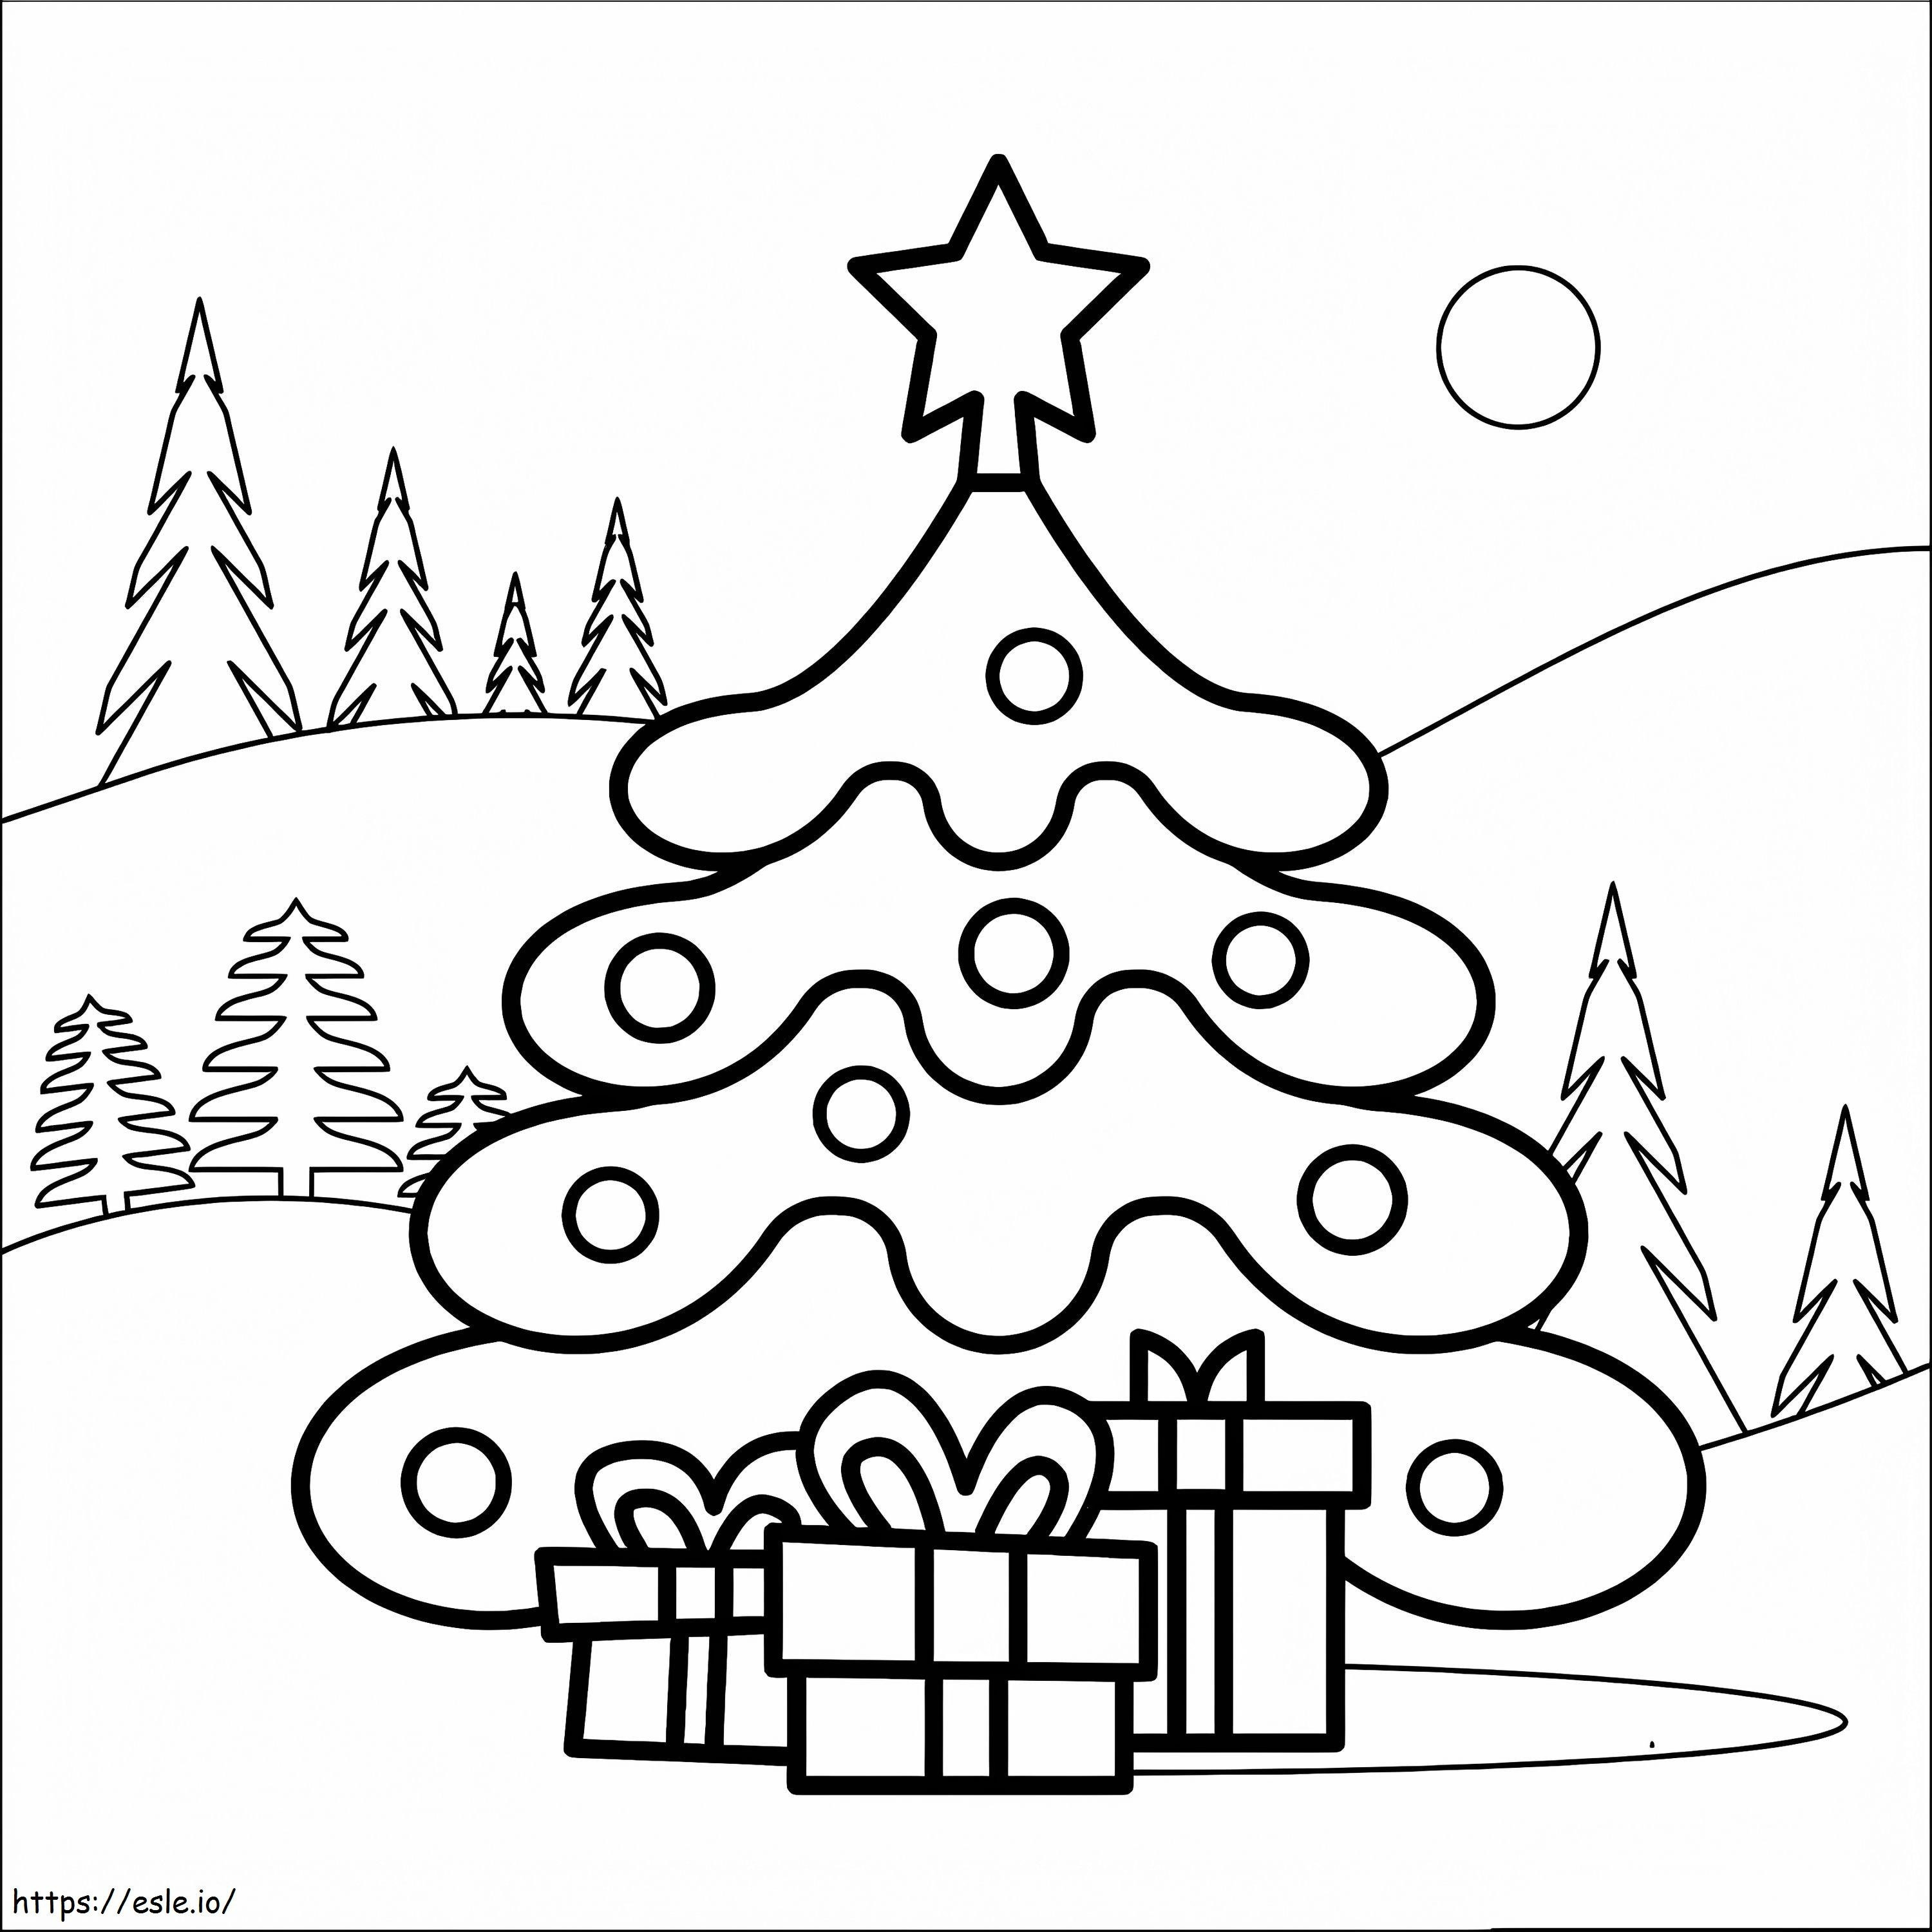 Árvore de Natal e presentes 3 para colorir